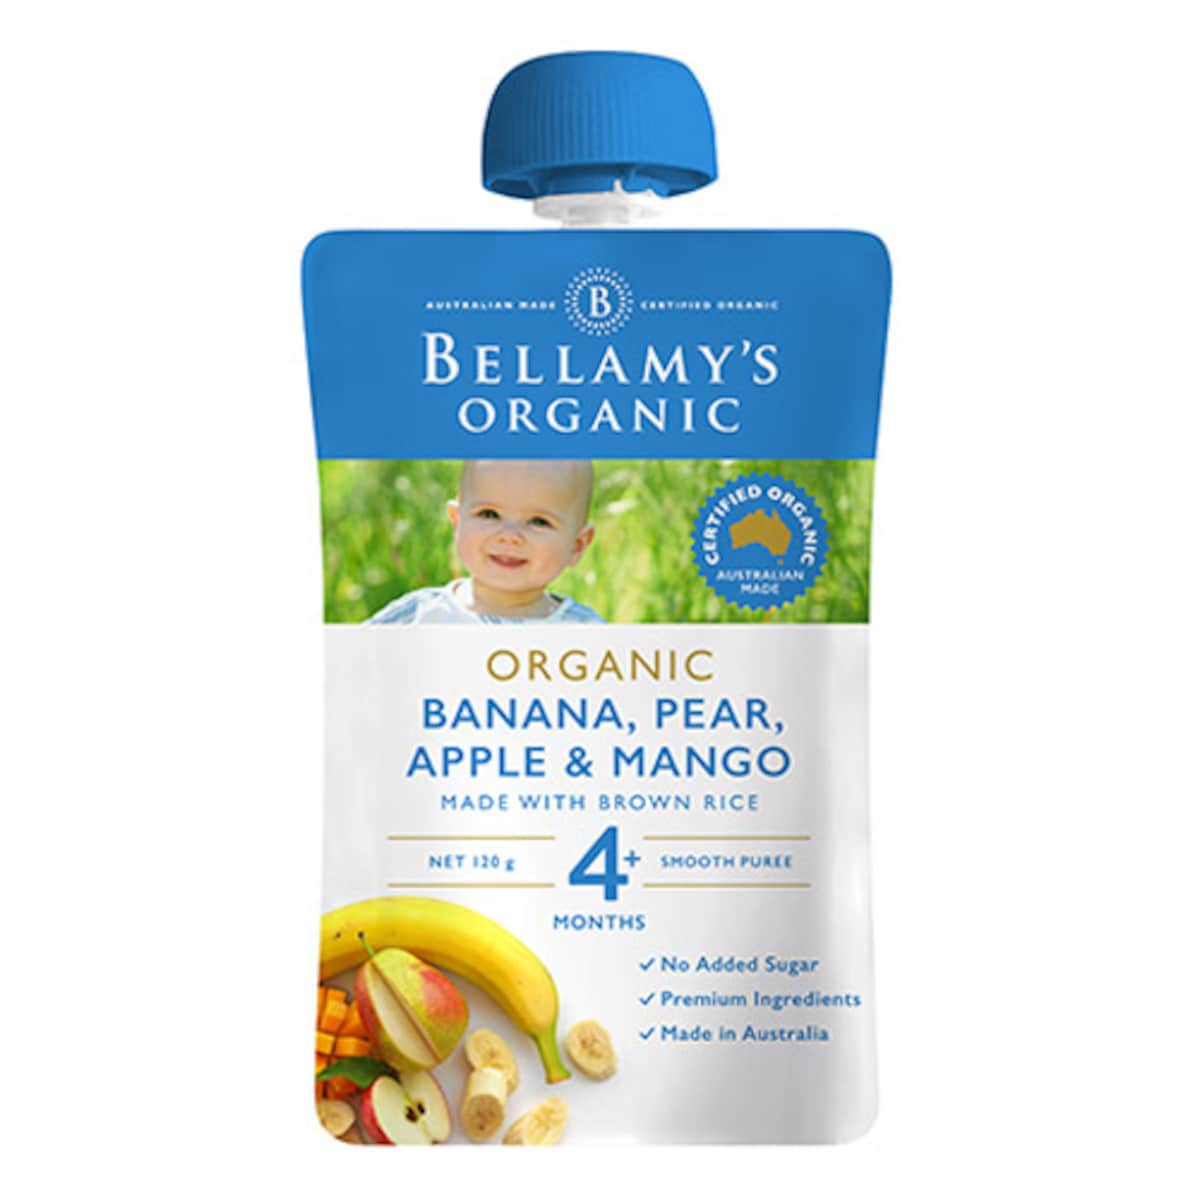 Bellamys Organic Banana, Pear, Apple & Mango 120g